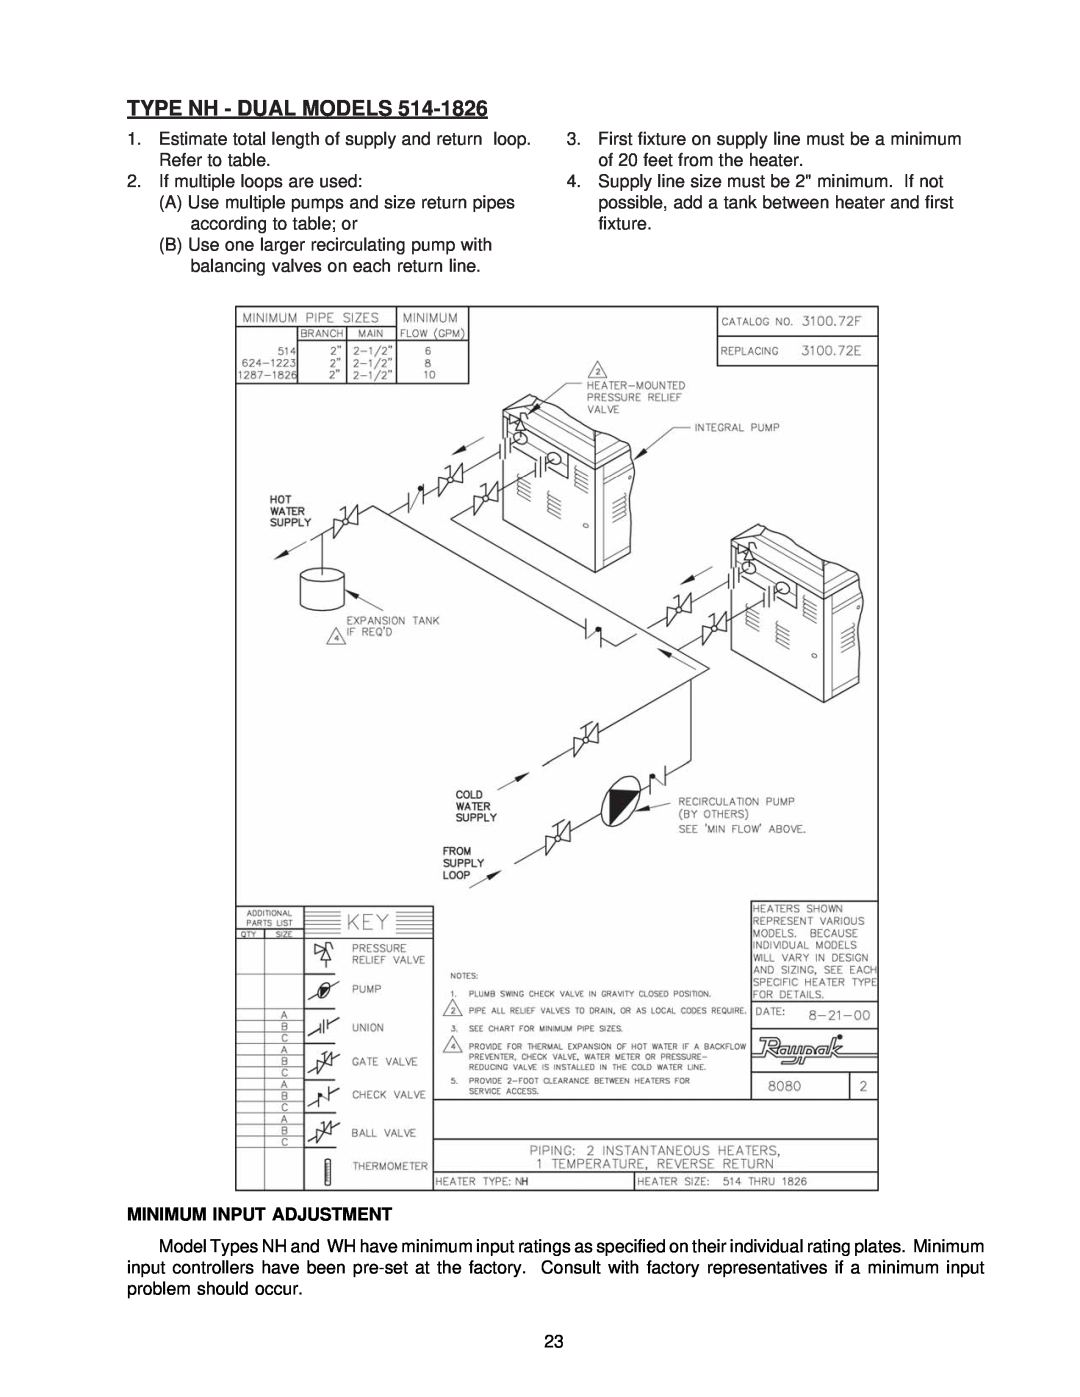 Raypak 0133-4001 manual Type Nh - Dual Models, Minimum Input Adjustment 